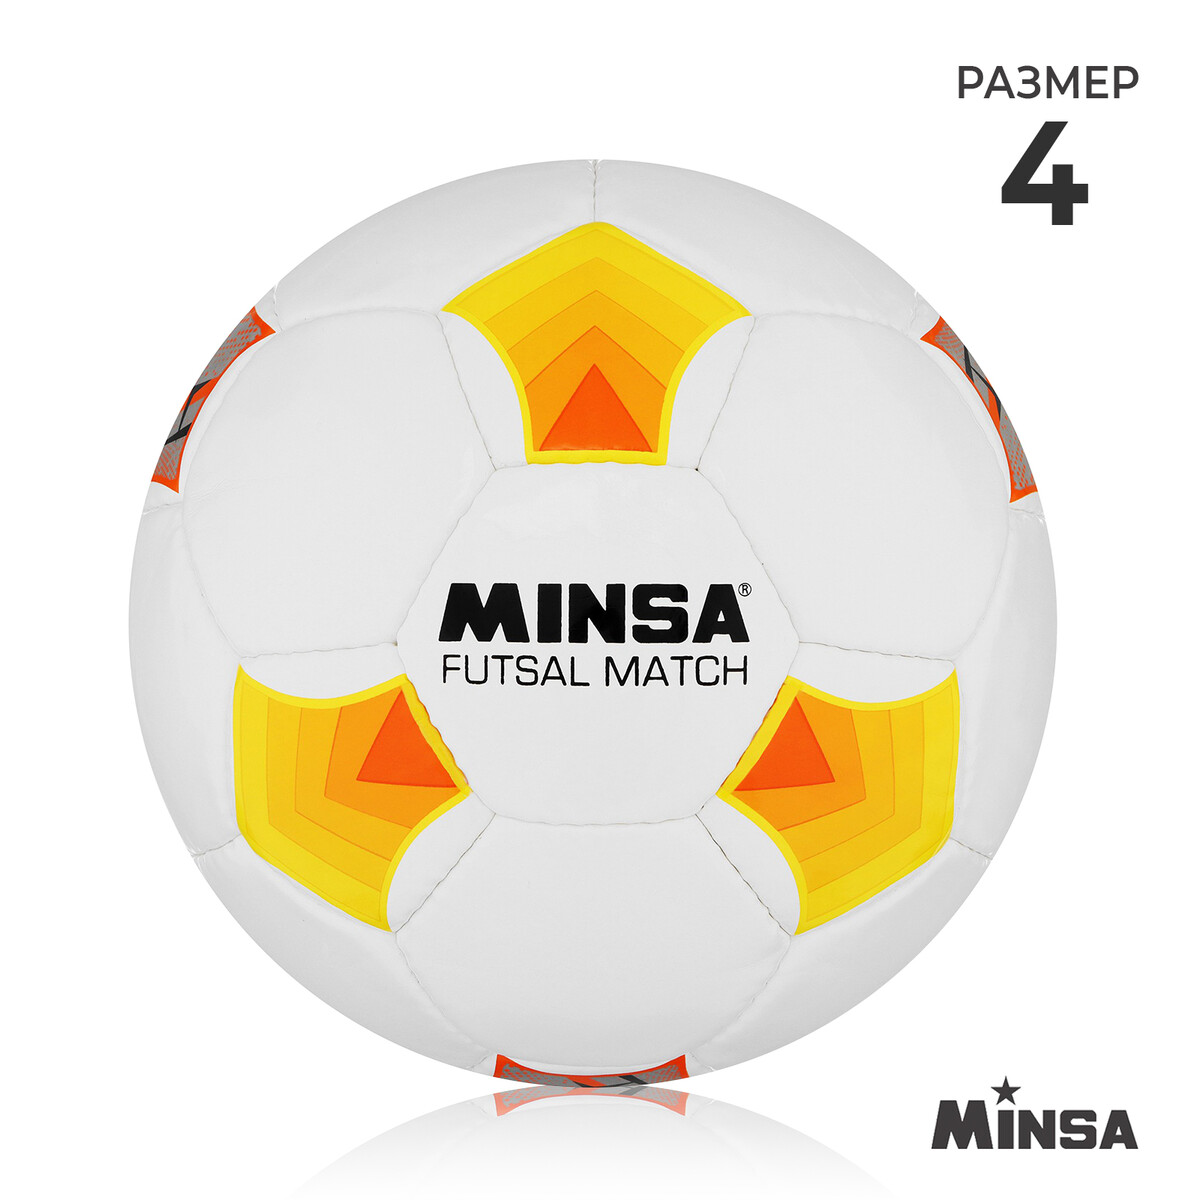 Мяч футбольный minsa futsal match, pu, машинная сшивка, 32 панели, р. 4 мяч футзальный torres futsal match fs32064 р 4